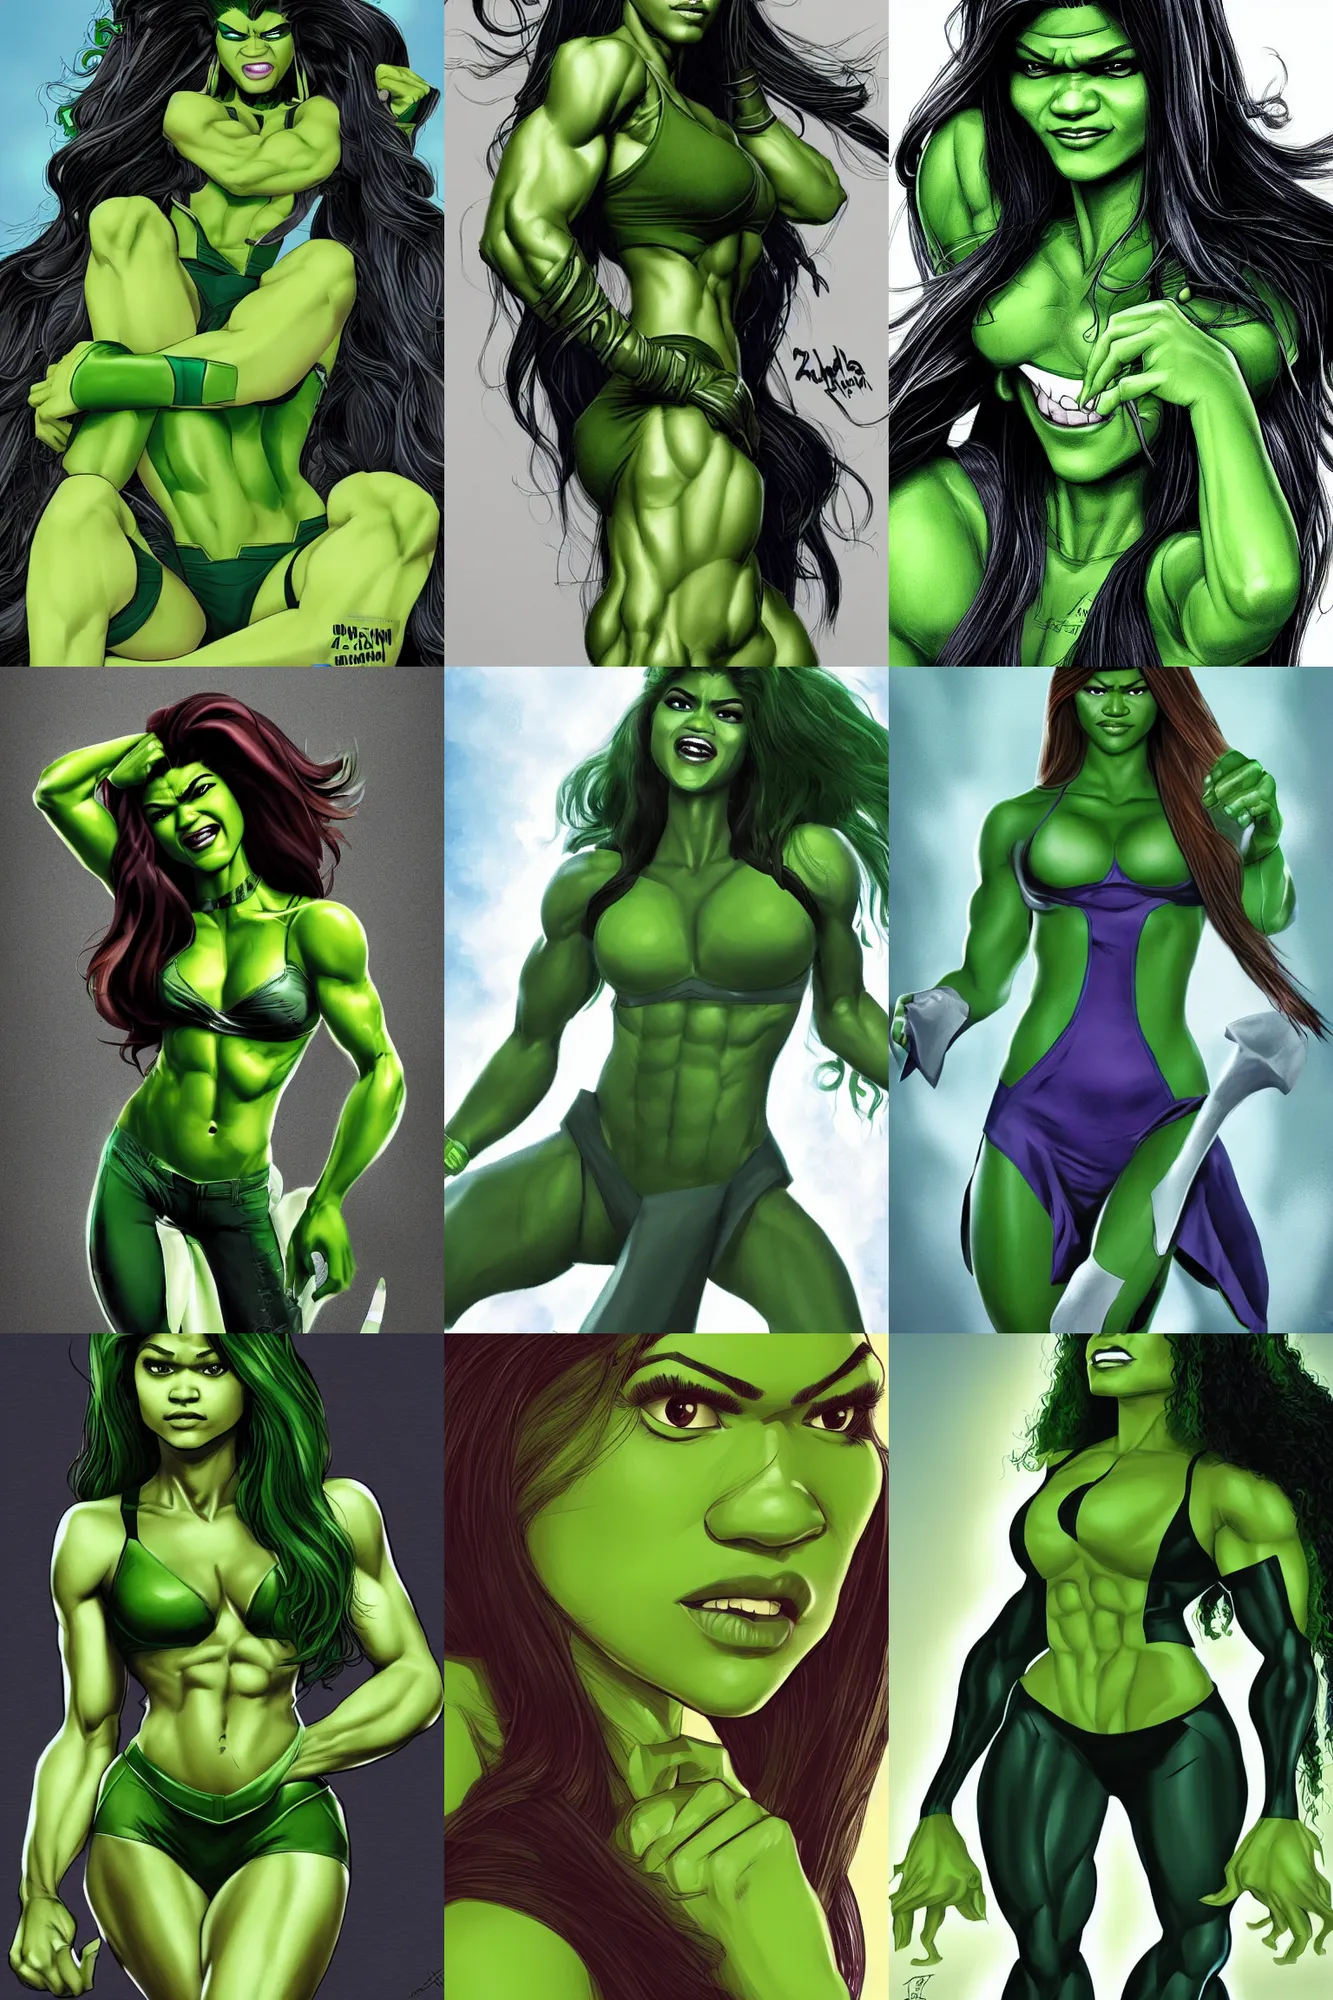 Prompt: Zendaya as She-Hulk, long hair, stunning appealing figure, alt fanart realistic illustration by Kim Sung Hwan beautiful